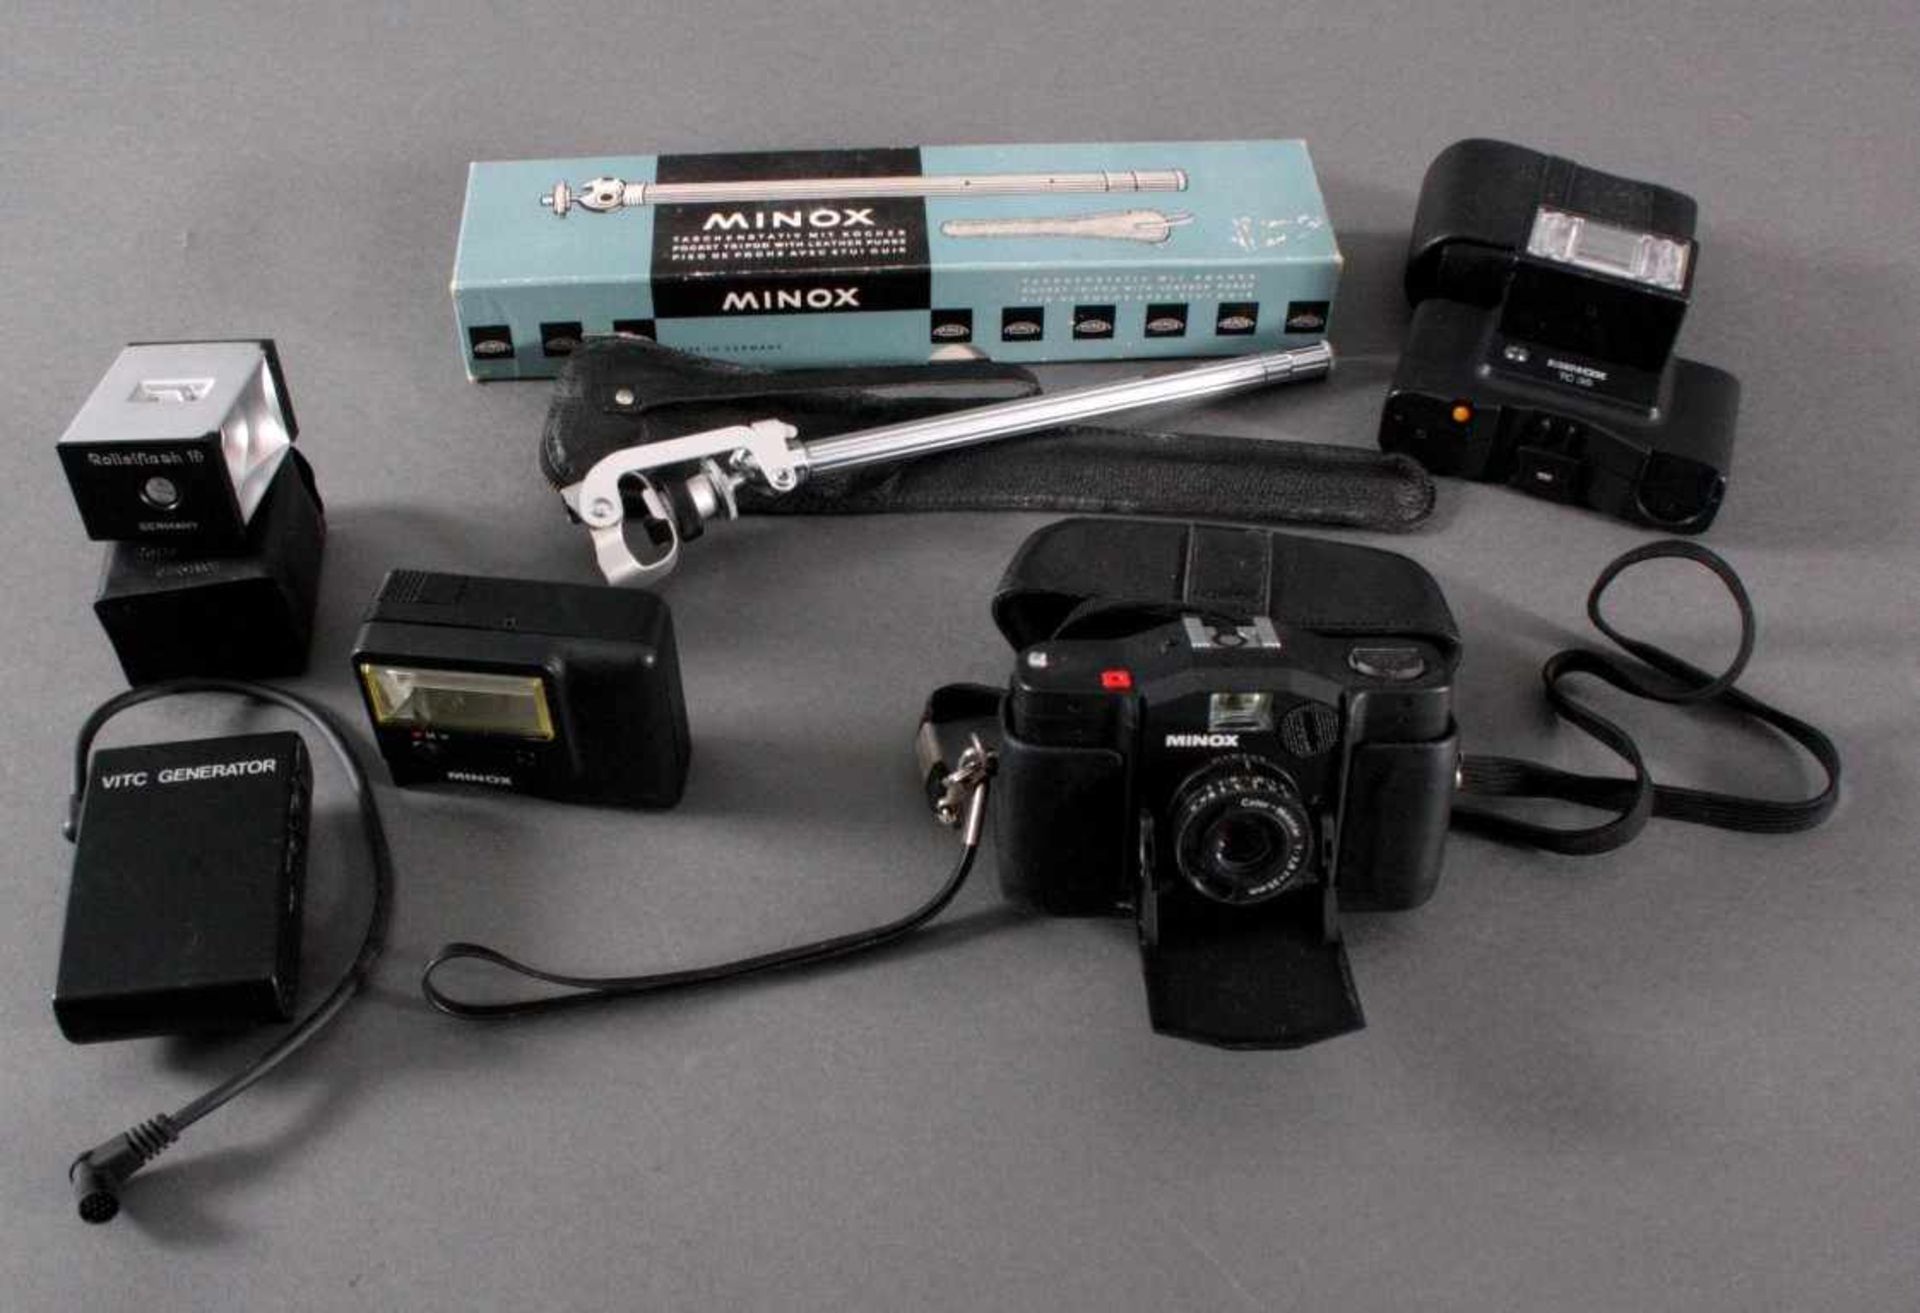 Minoxkamera mit Zubehör1 Kamera Minox 35 EL.1 VITC Generator.1 Zusatzblitz TC 35.1 Zusatzblitz FC